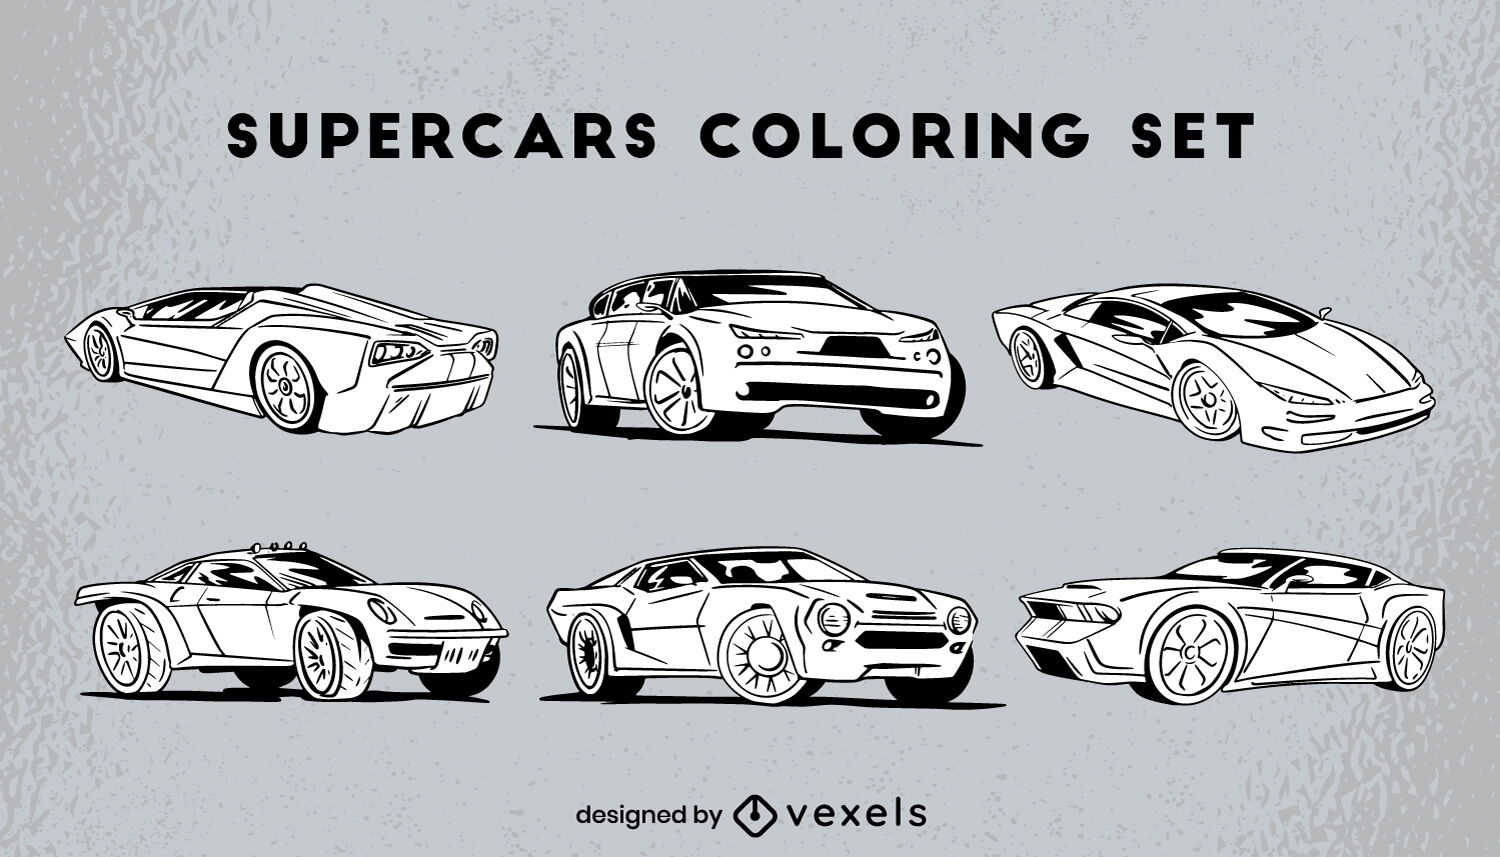 Super cars cool transportation coloring set